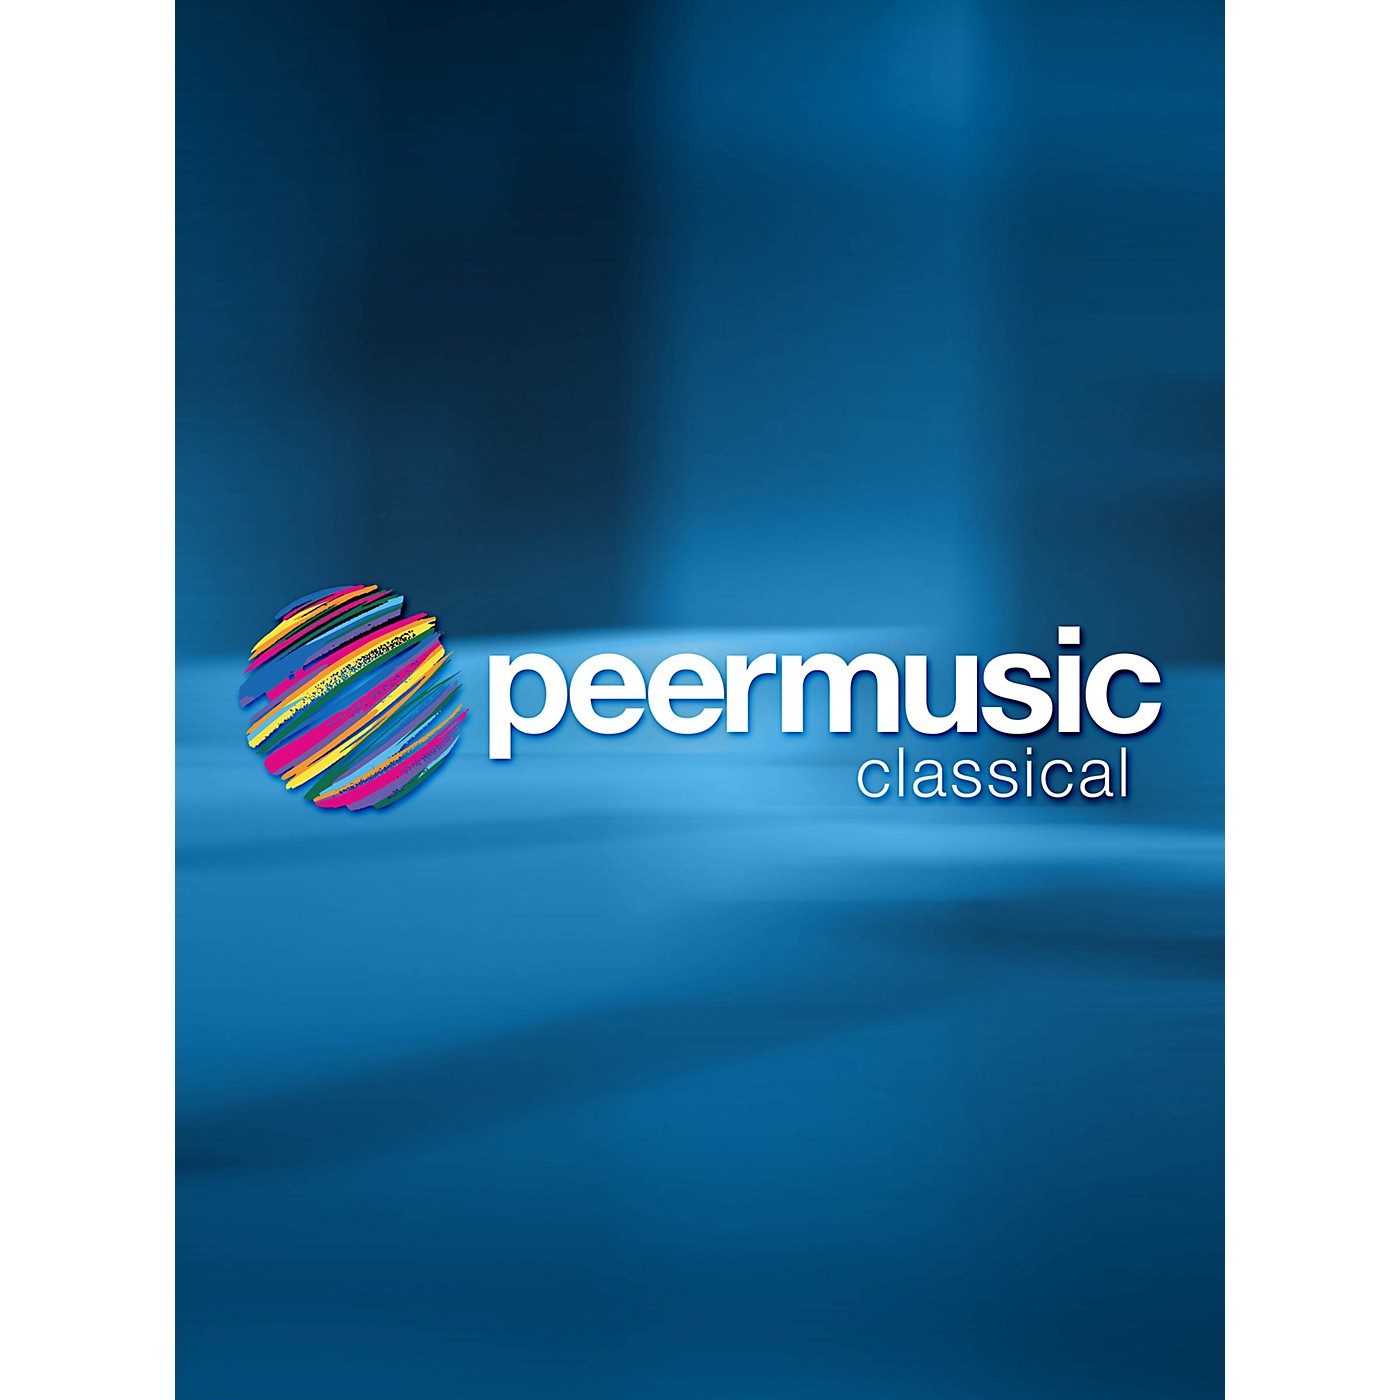 Peer Music Hymn (The Power & the Glory, No. 2) Peermusic Classical Series Book  by David Uber thumbnail